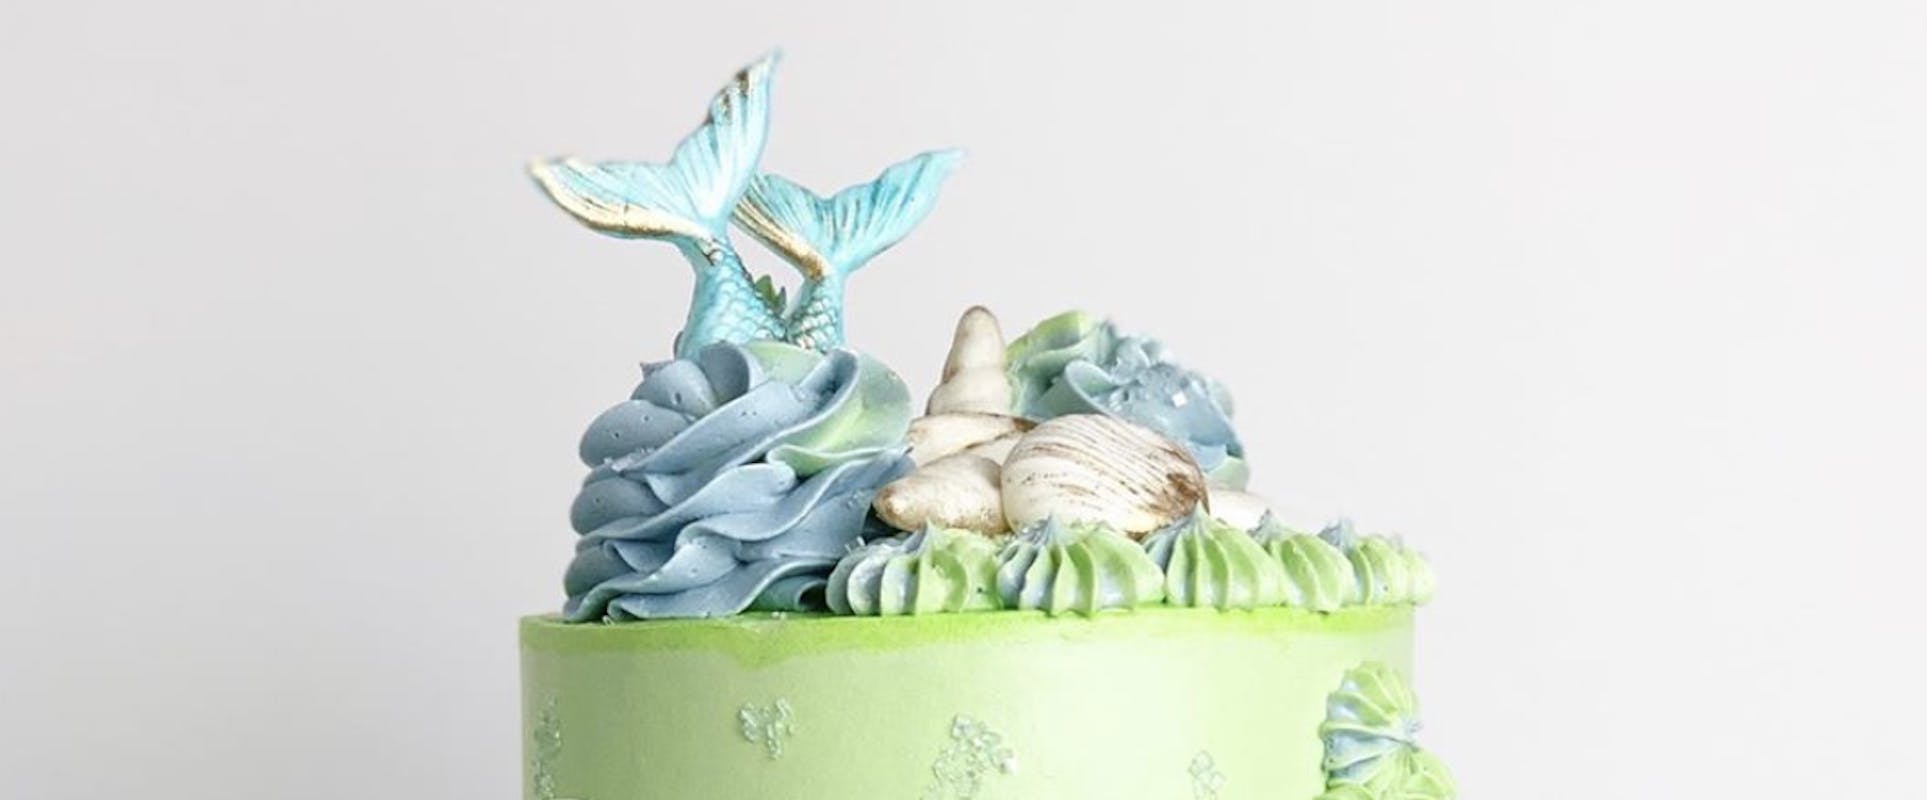 10 Cake Tools to Create Impressive Cake Designs